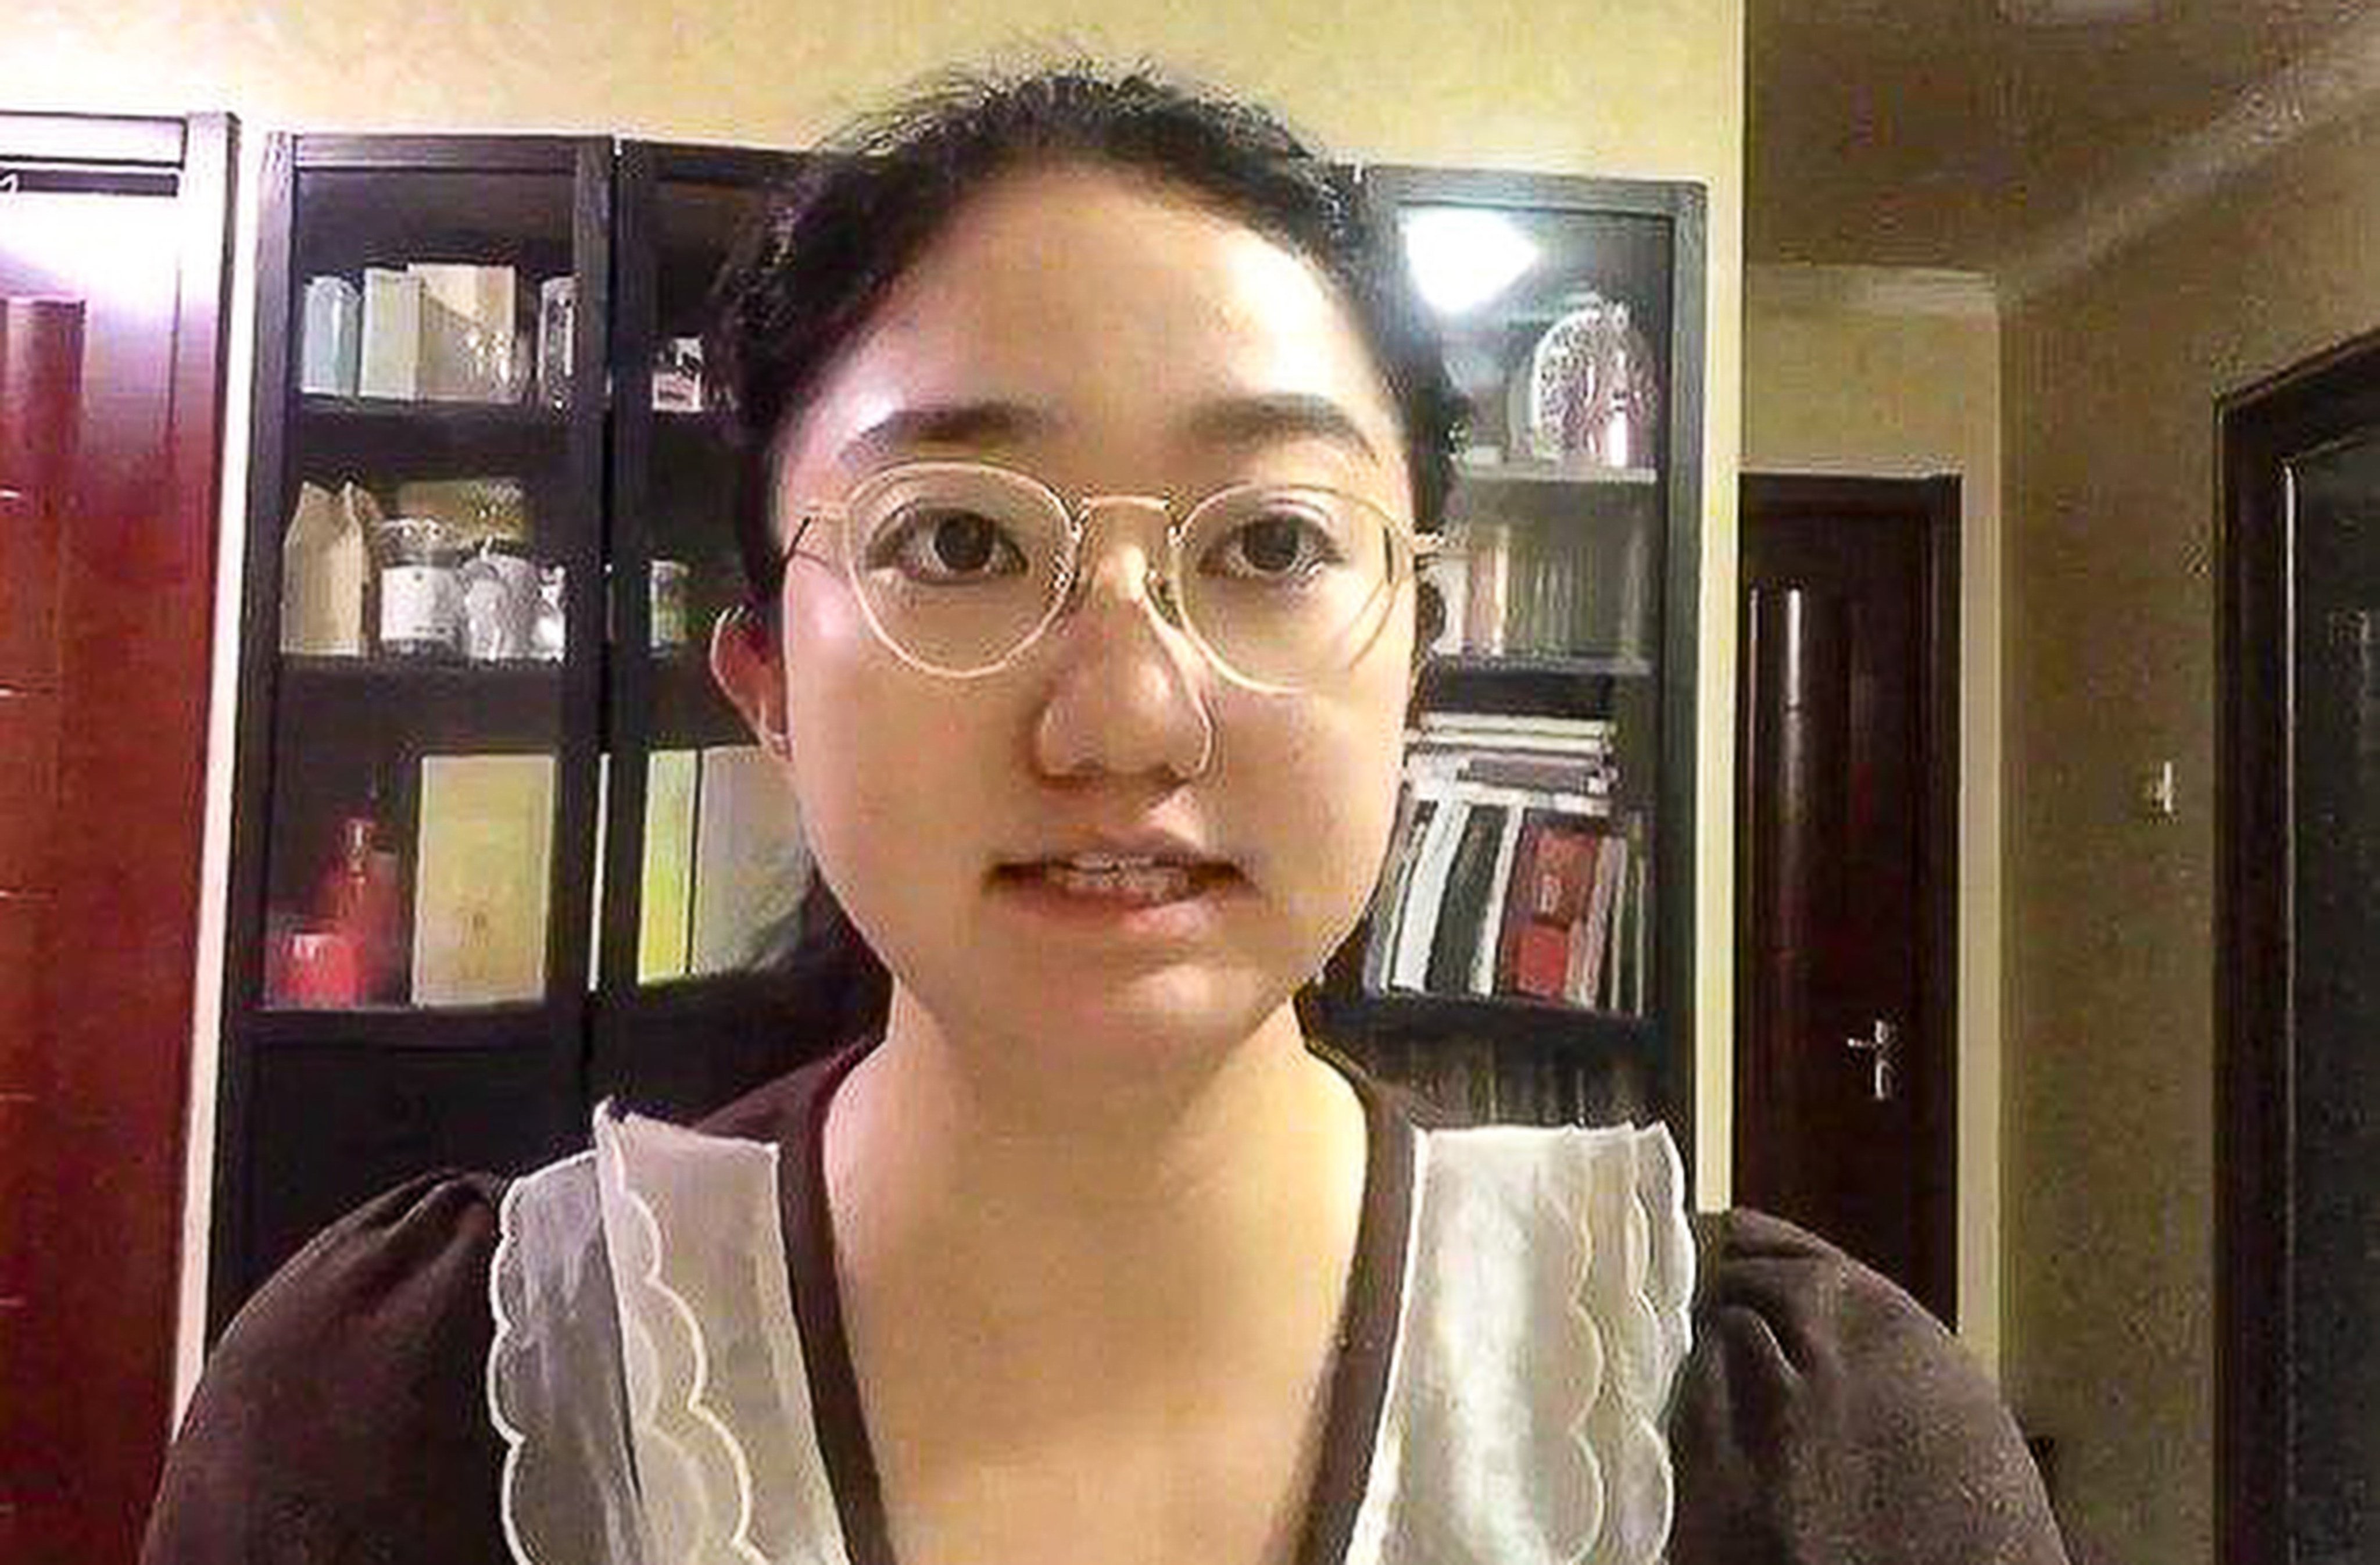 Rights activist Li Qiaochu was taken into custody three years ago. Photo: Handout